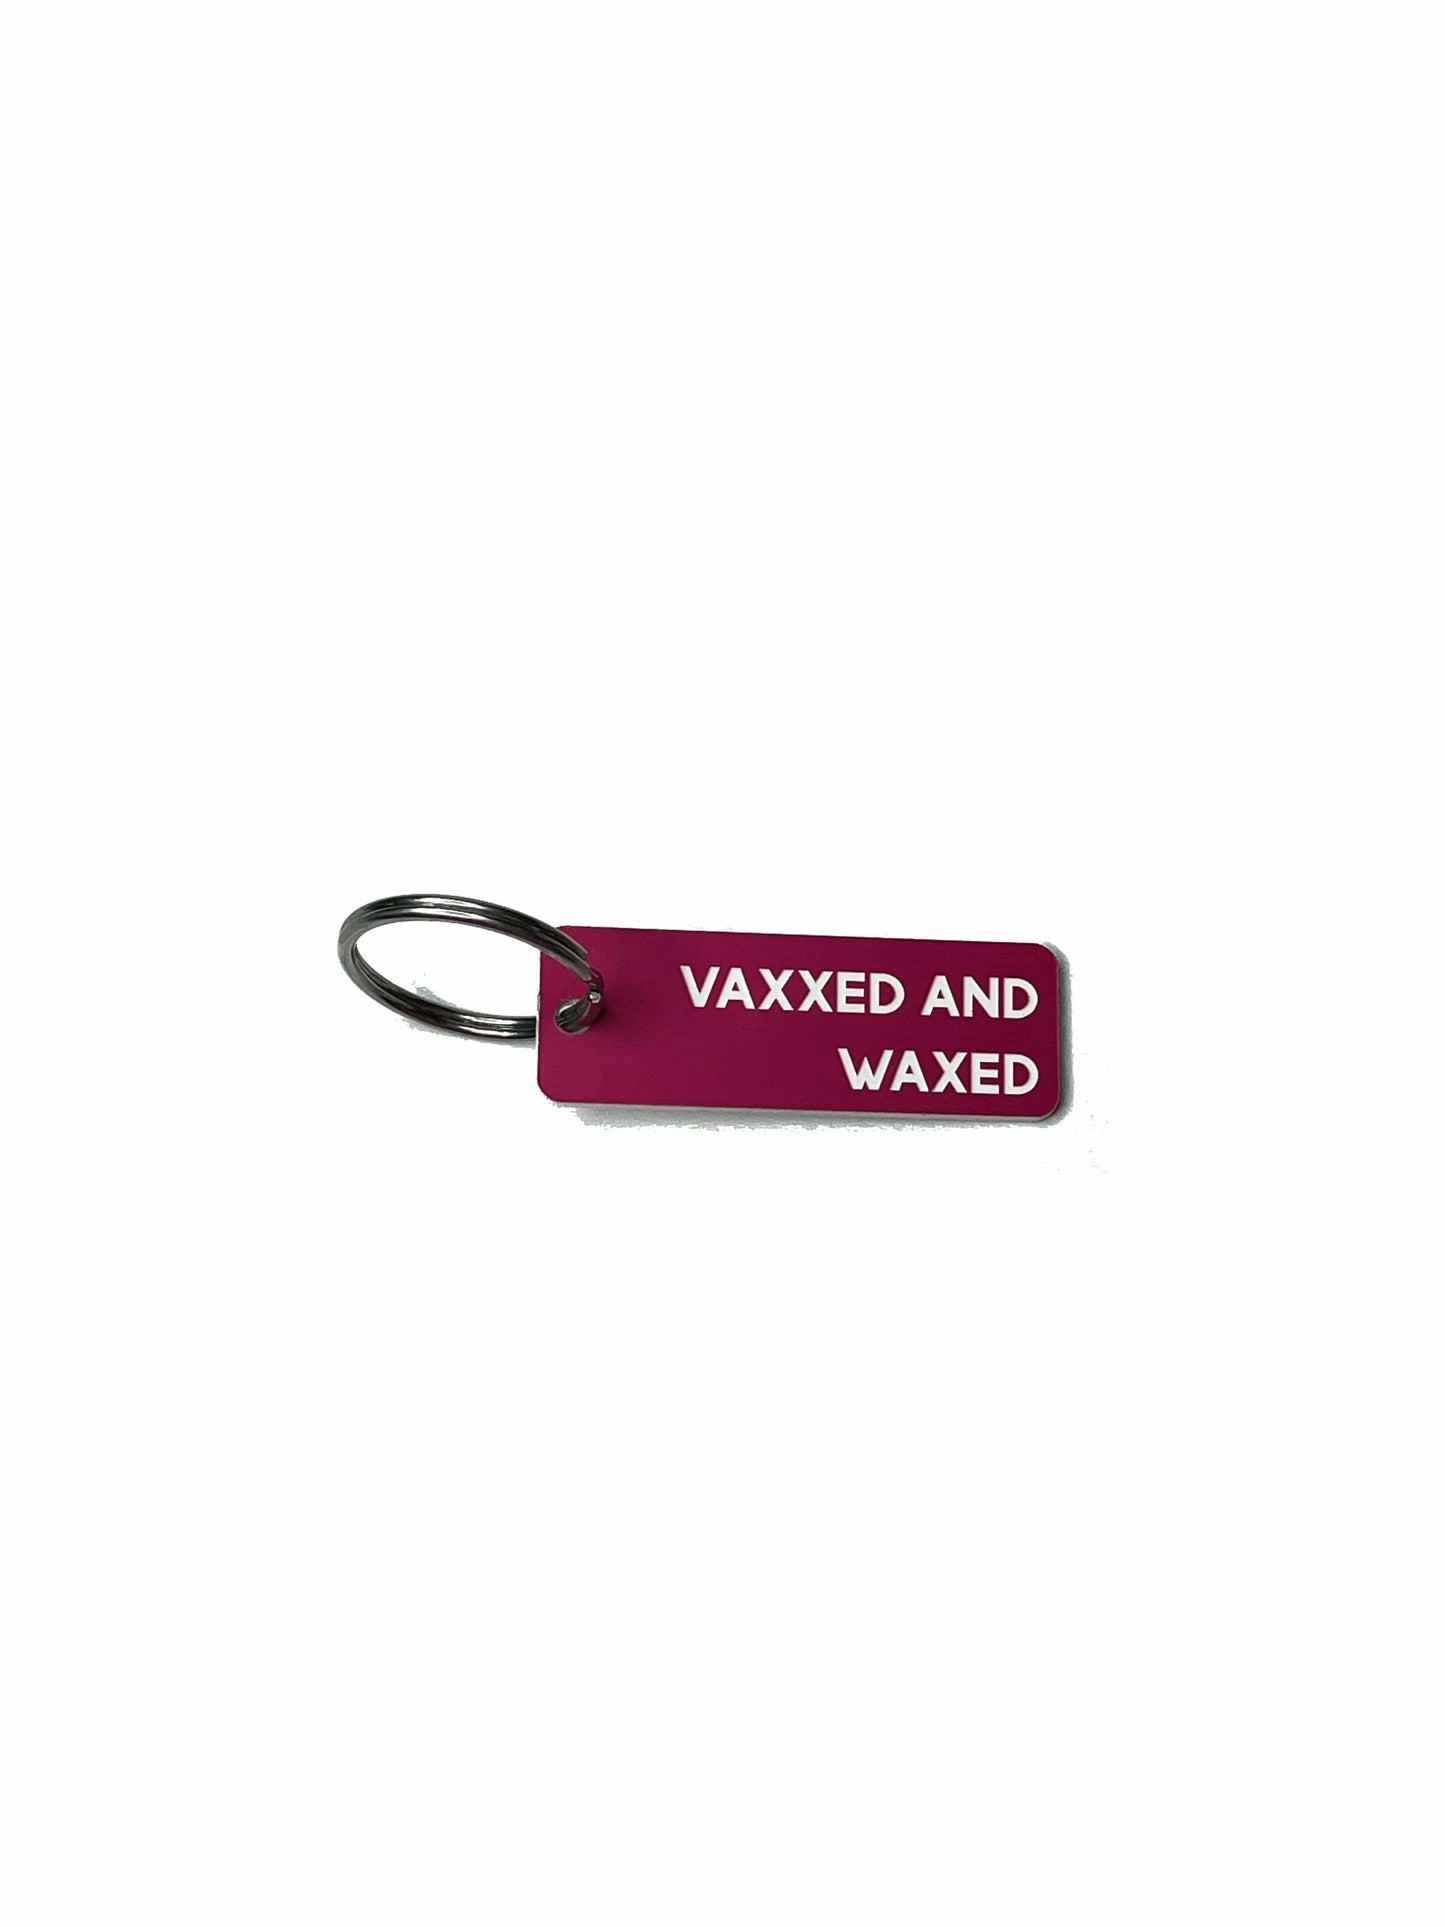 Vaxxed and Waxed - Acrylic Key Tag: Pink/White